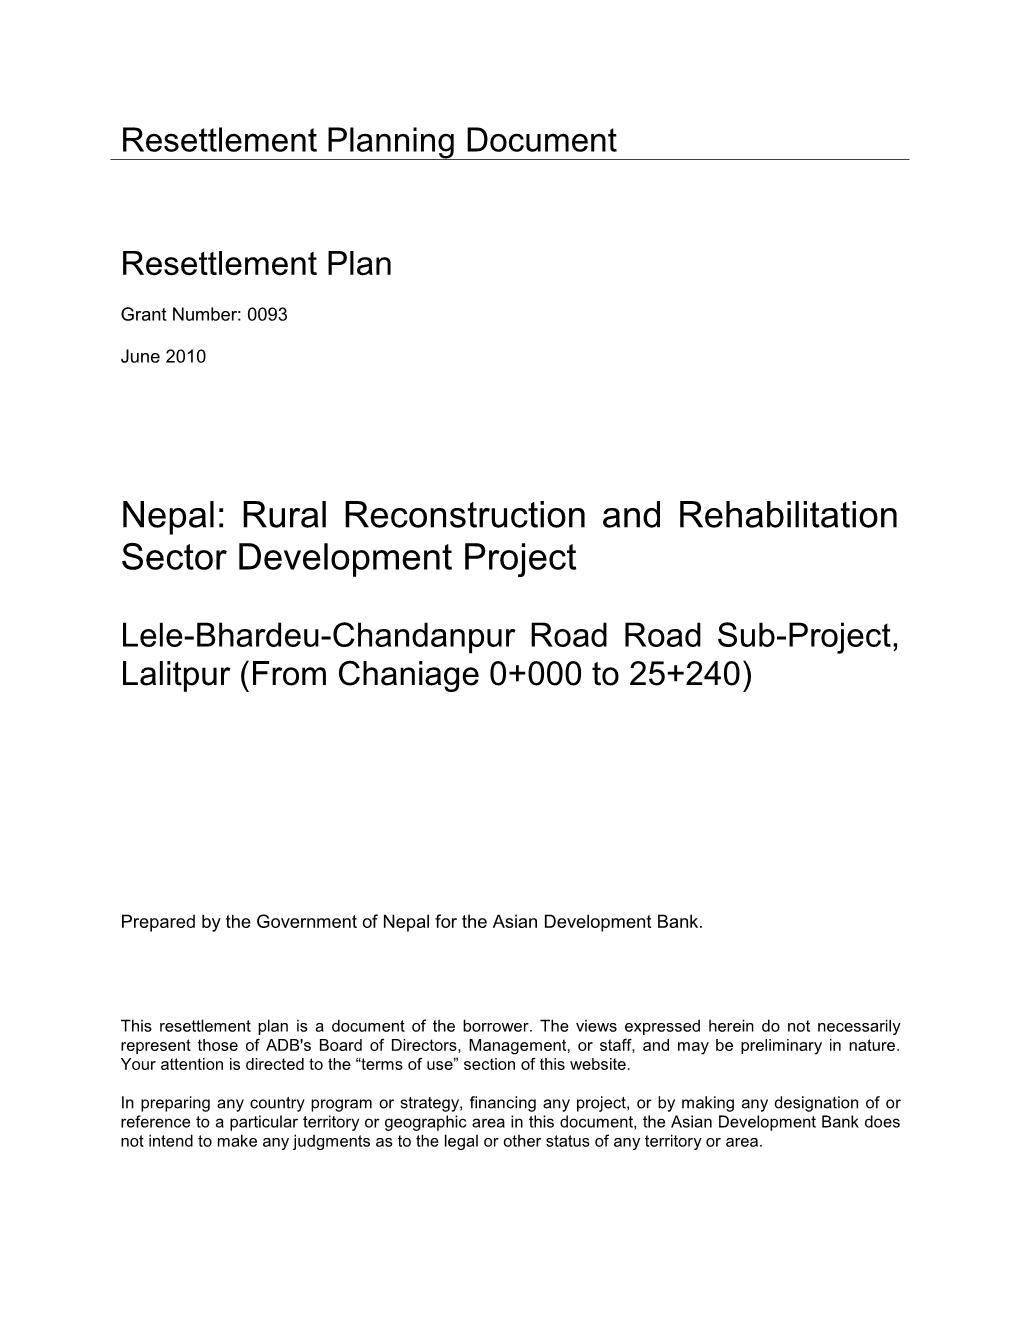 40554-022: Lele-Bhardeu-Chandanpur Road Sub-Project Resettlement Plan